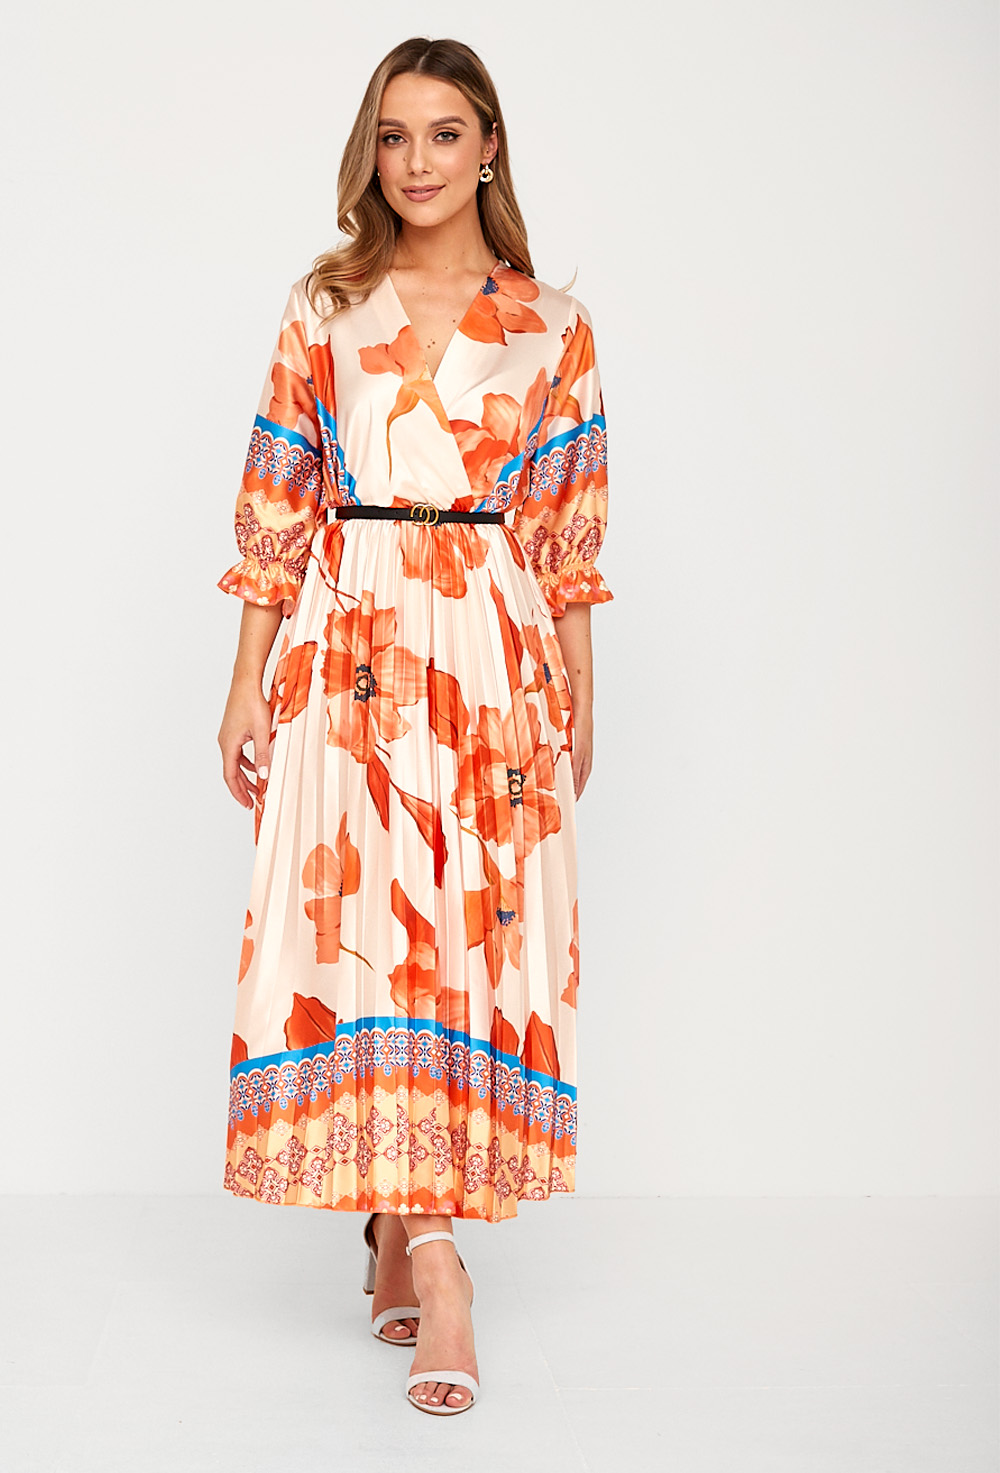 Rowen Floral Wrap Dress in Orange | iCLOTHING - iCLOTHING